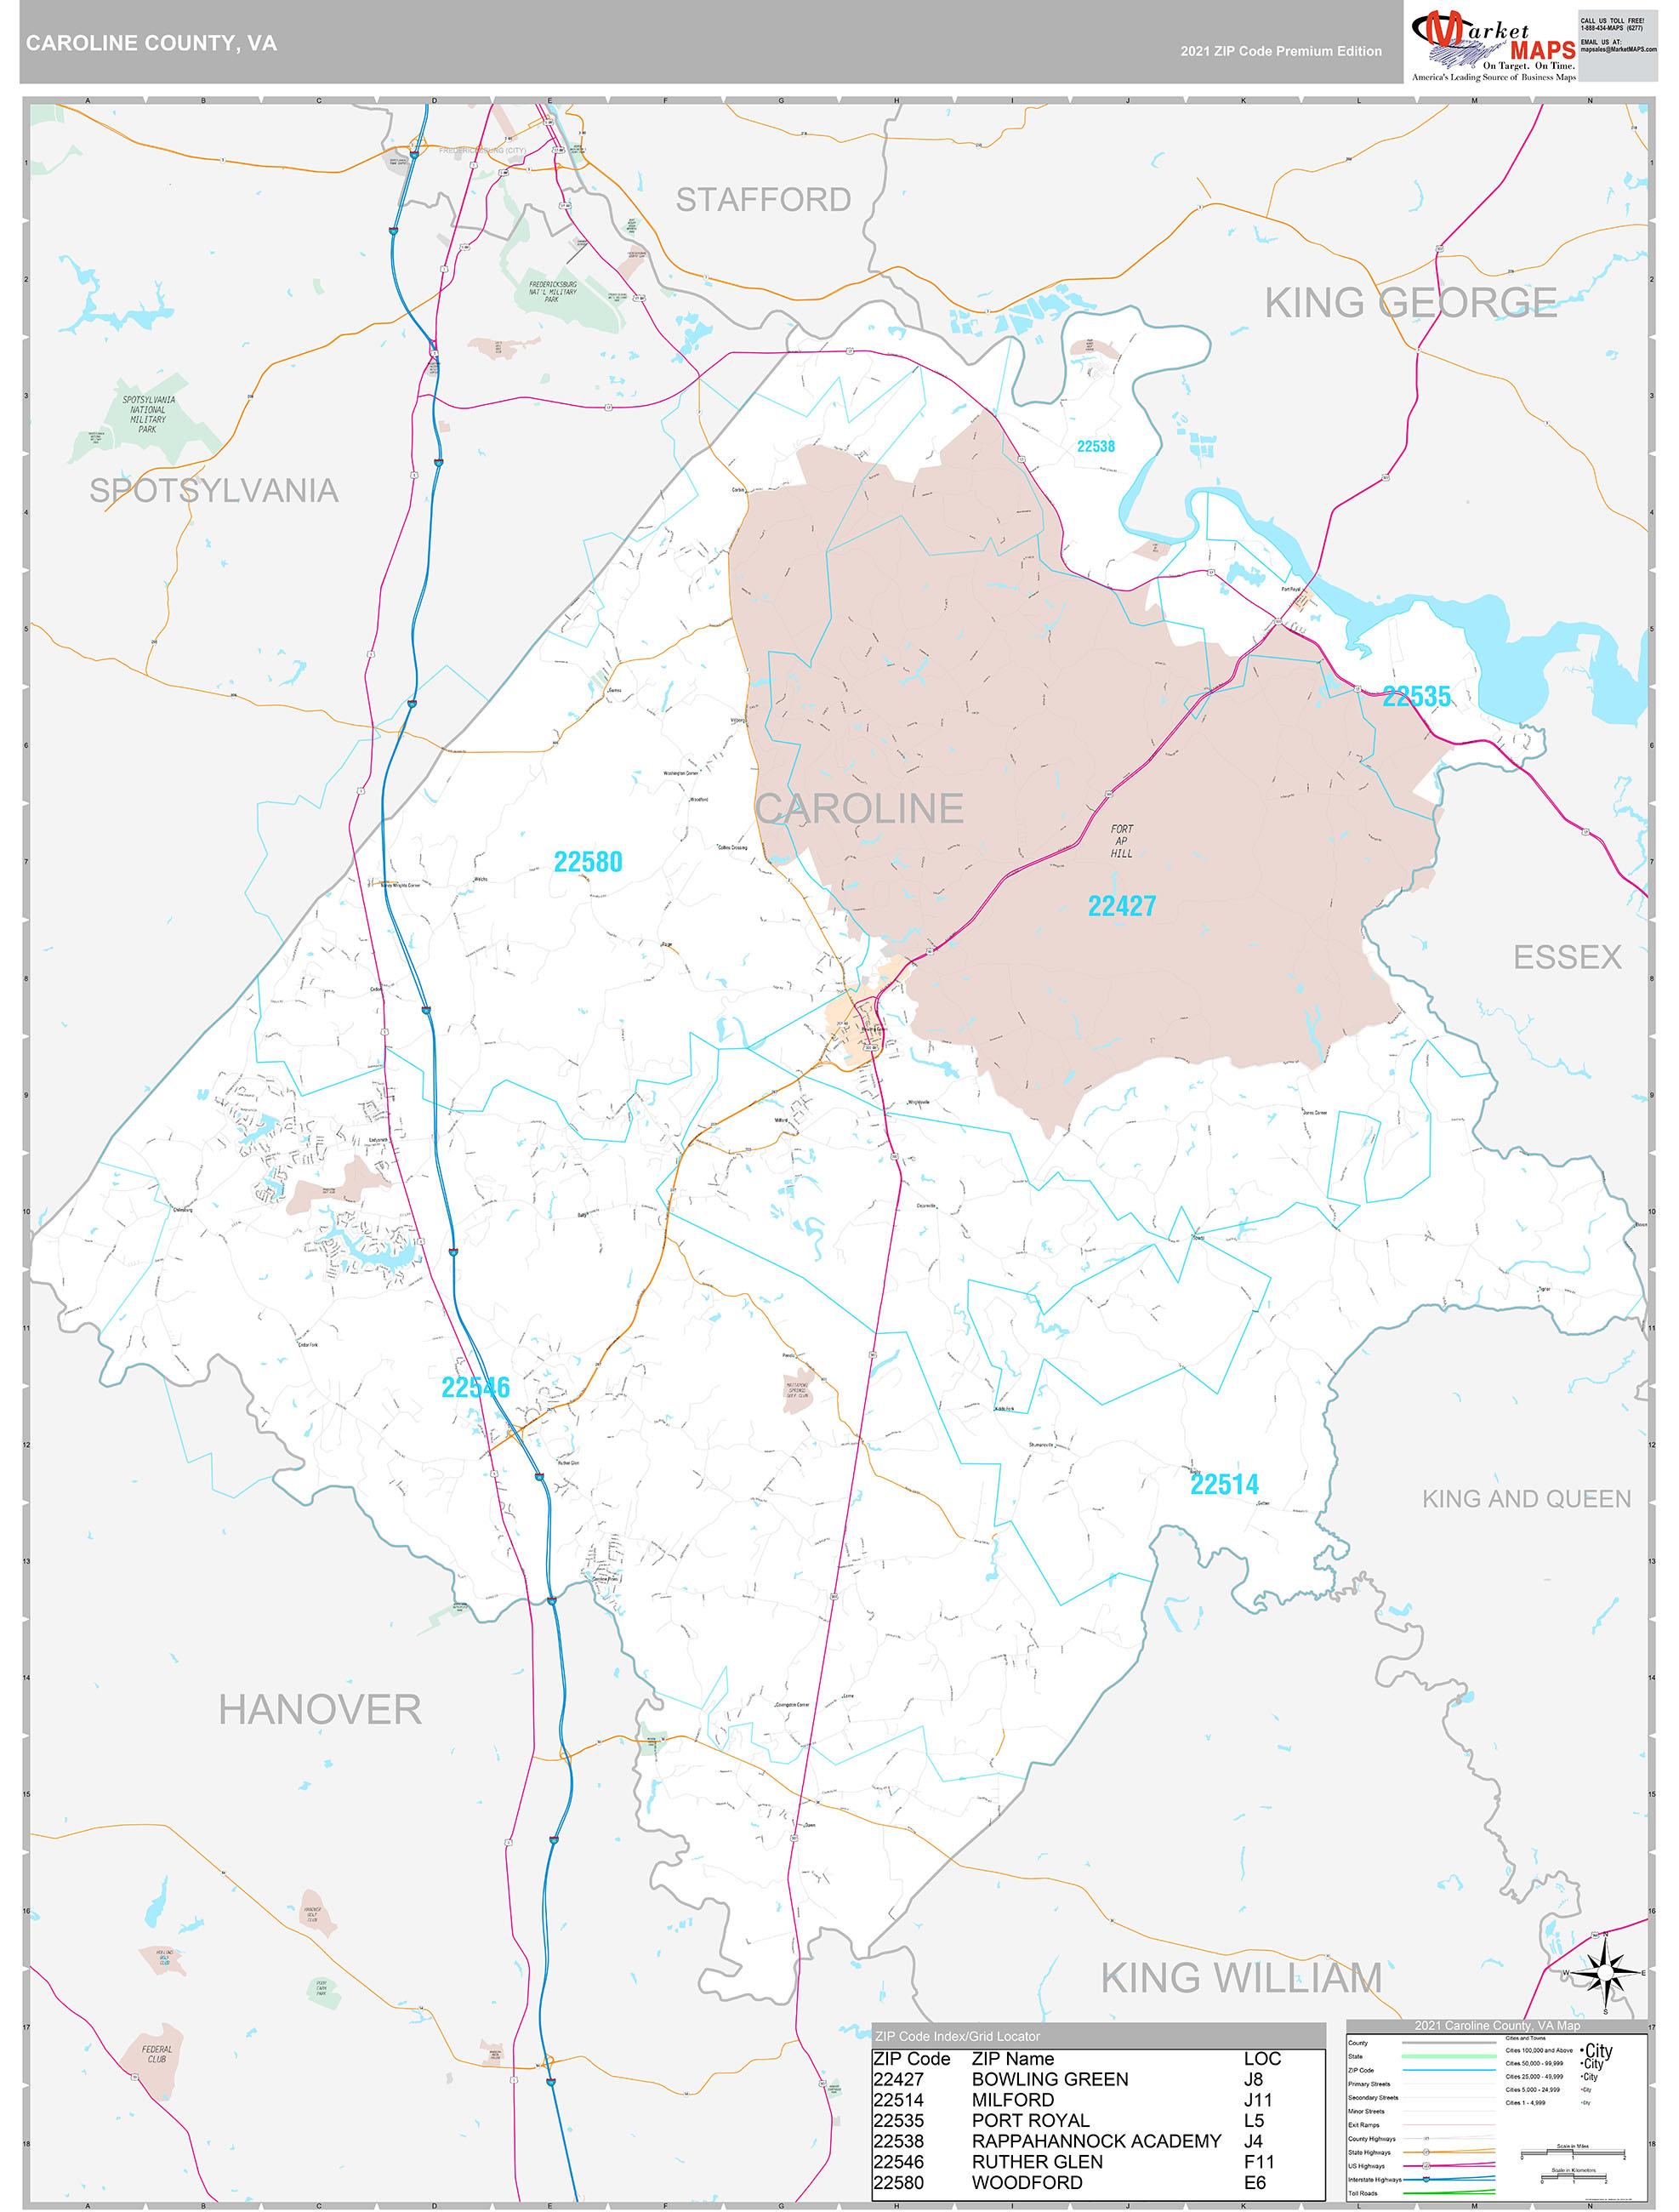 Caroline County, VA Wall Map Premium Style by MarketMAPS - MapSales.com